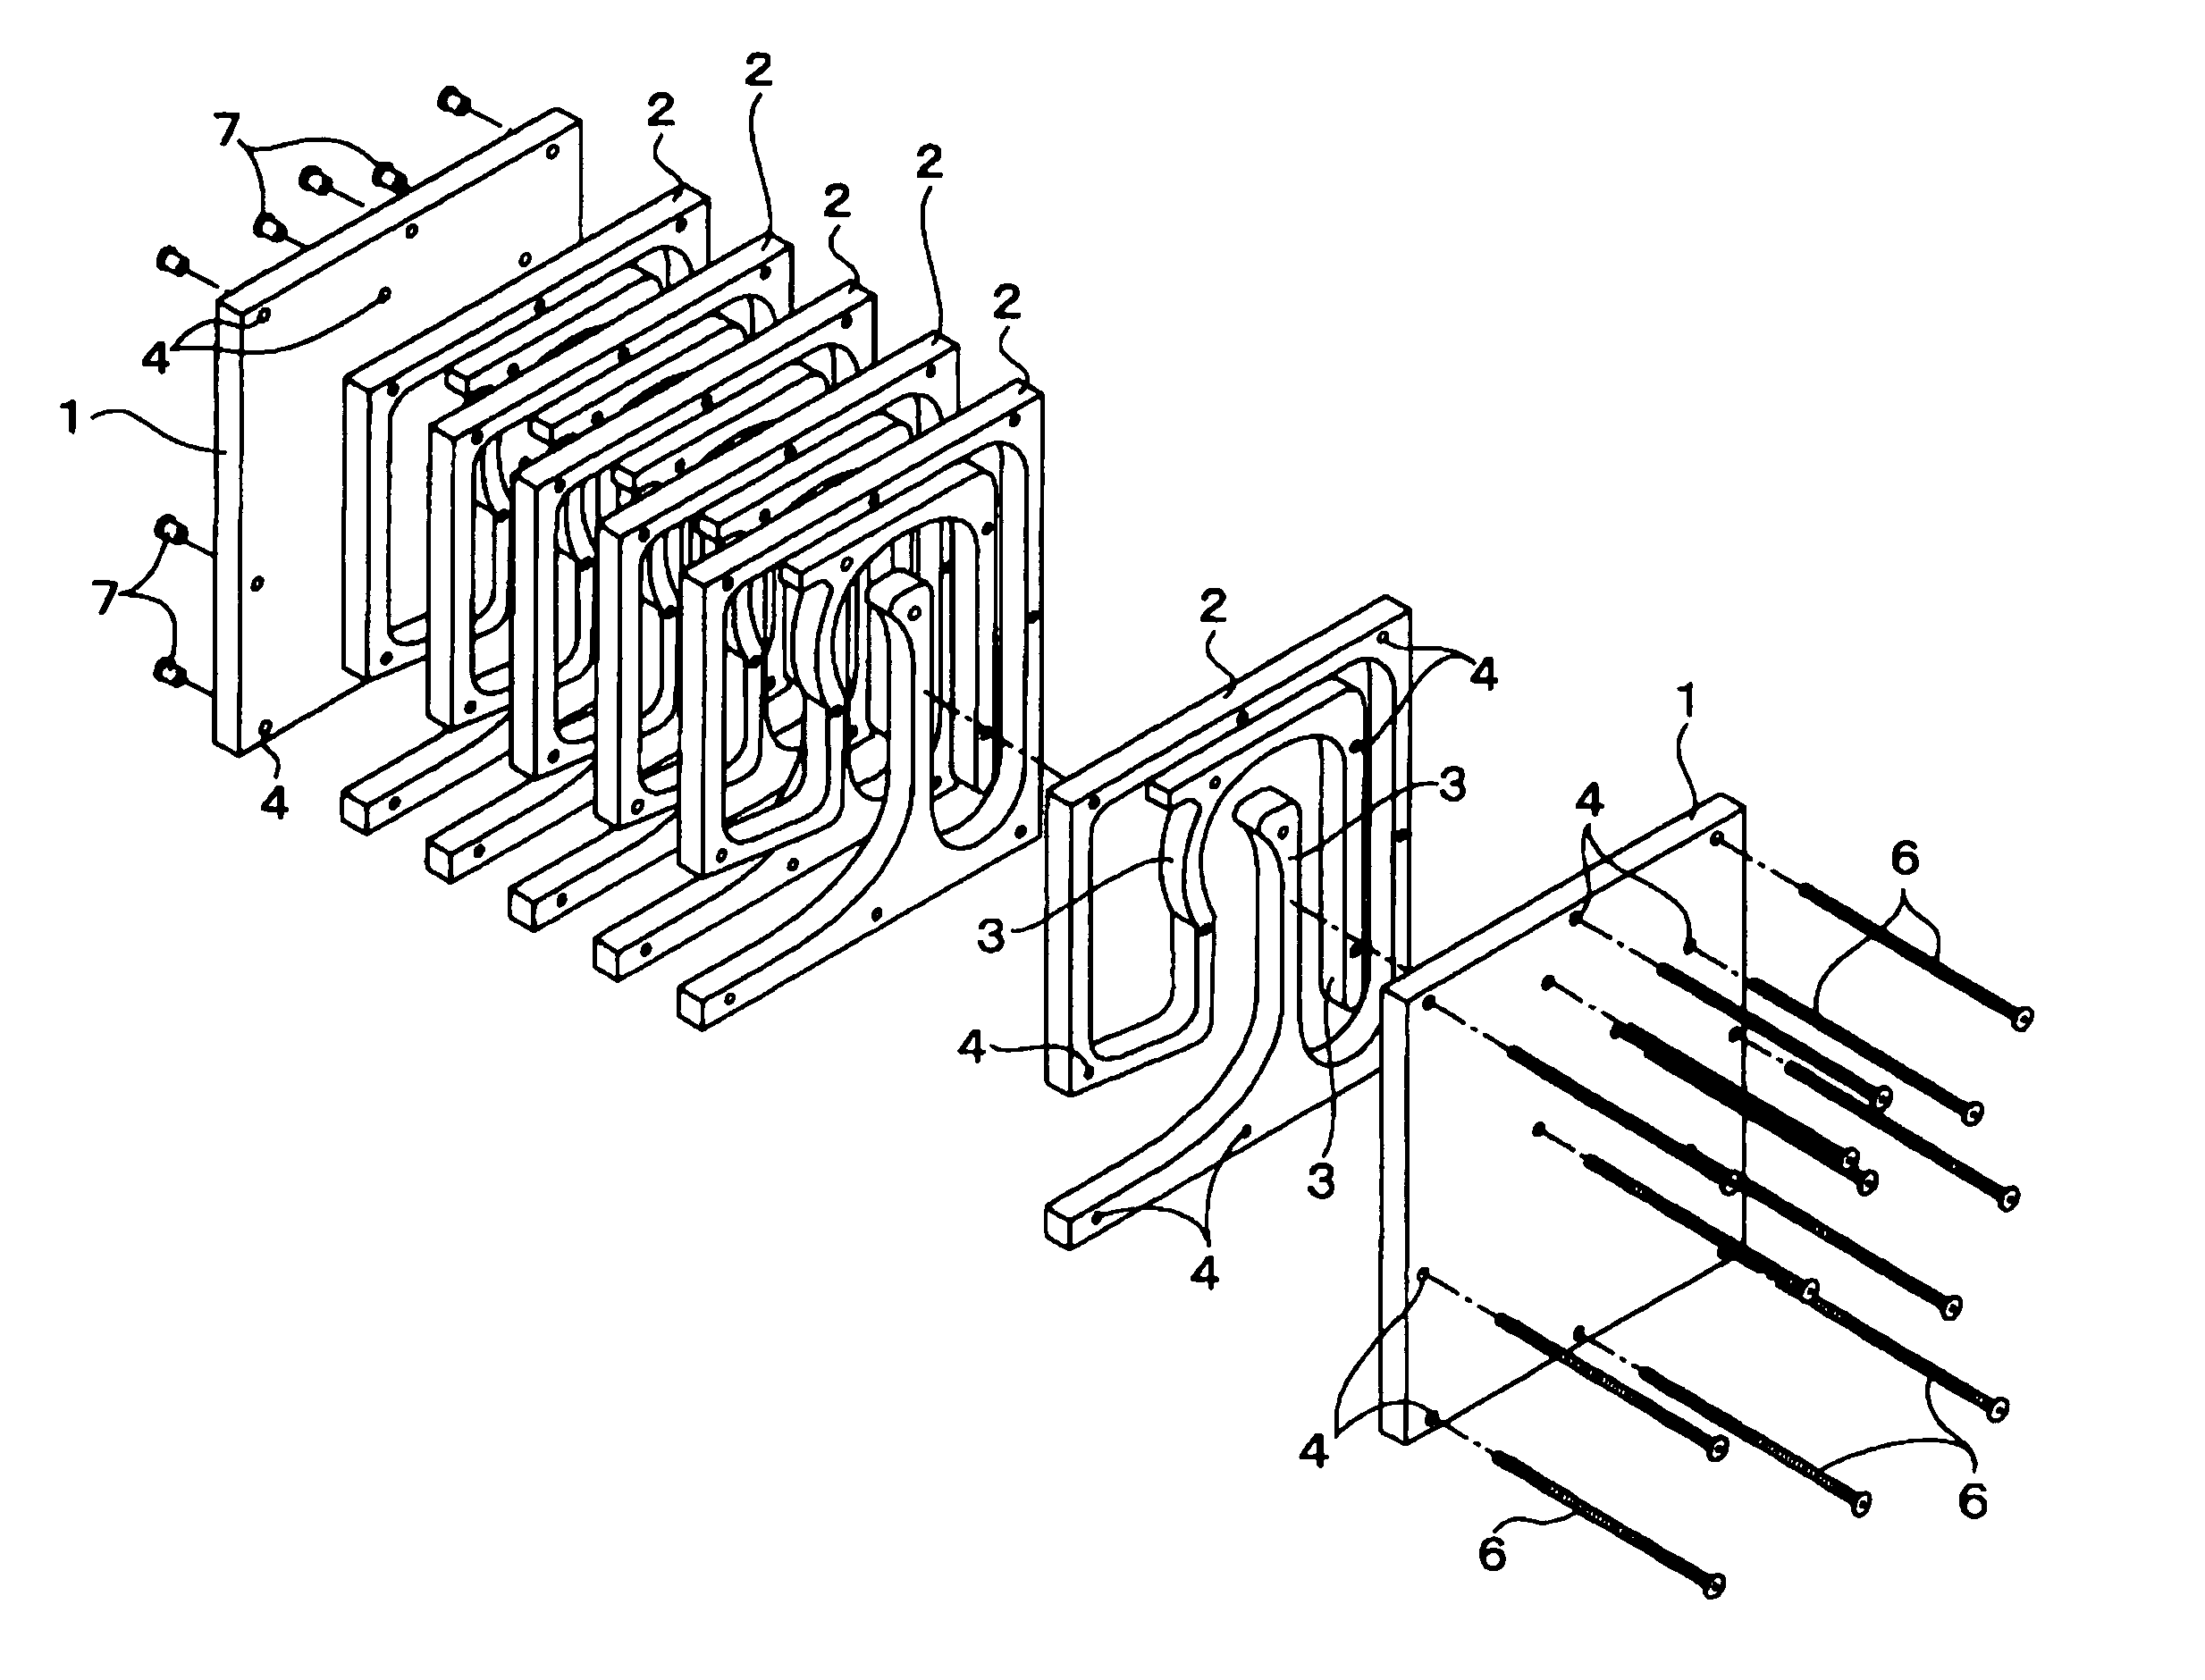 Speaker box for use in back-load horn